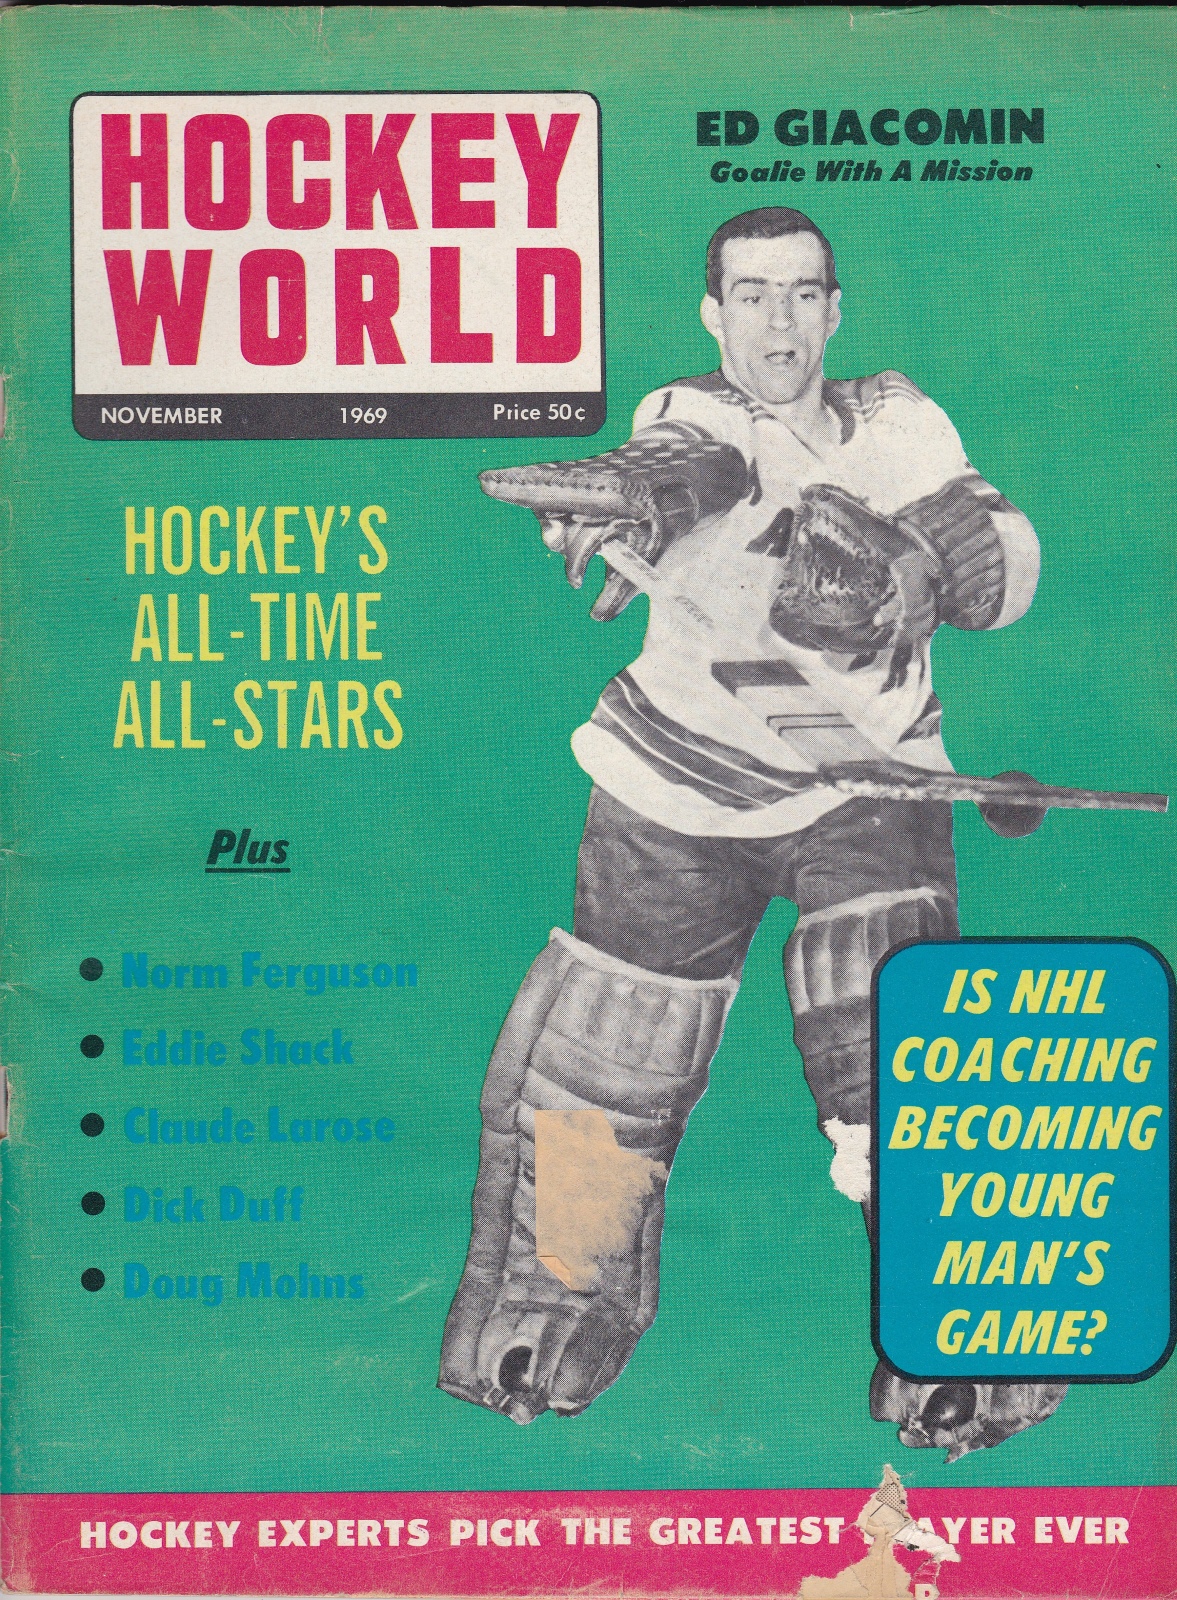 Hockey World Vol 5 No 2, November, 1969